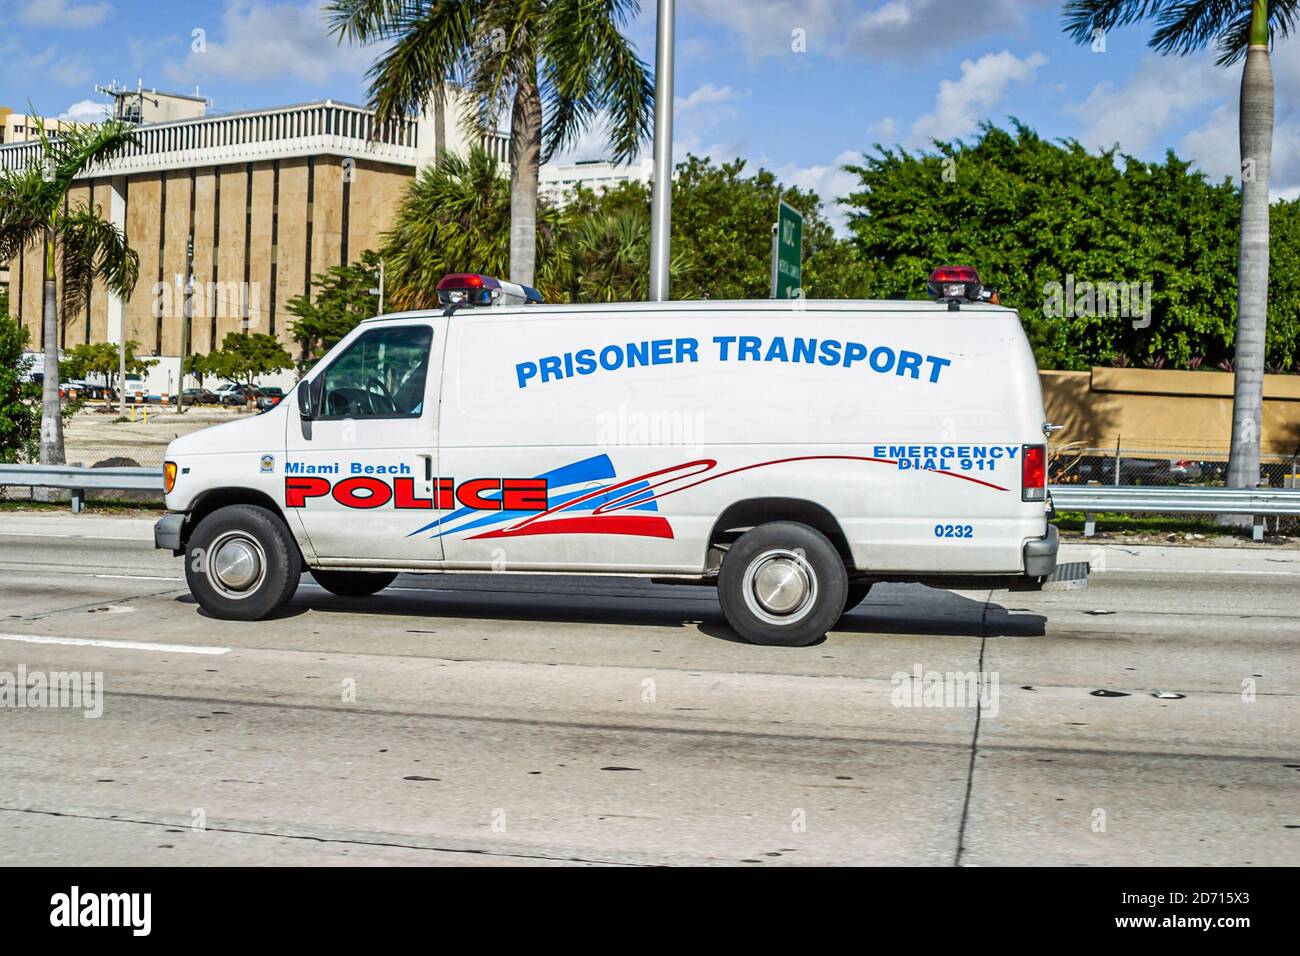 Miami Florida,police Prisoner Transport van,criminal law enforcement vehicle, Stock Photo